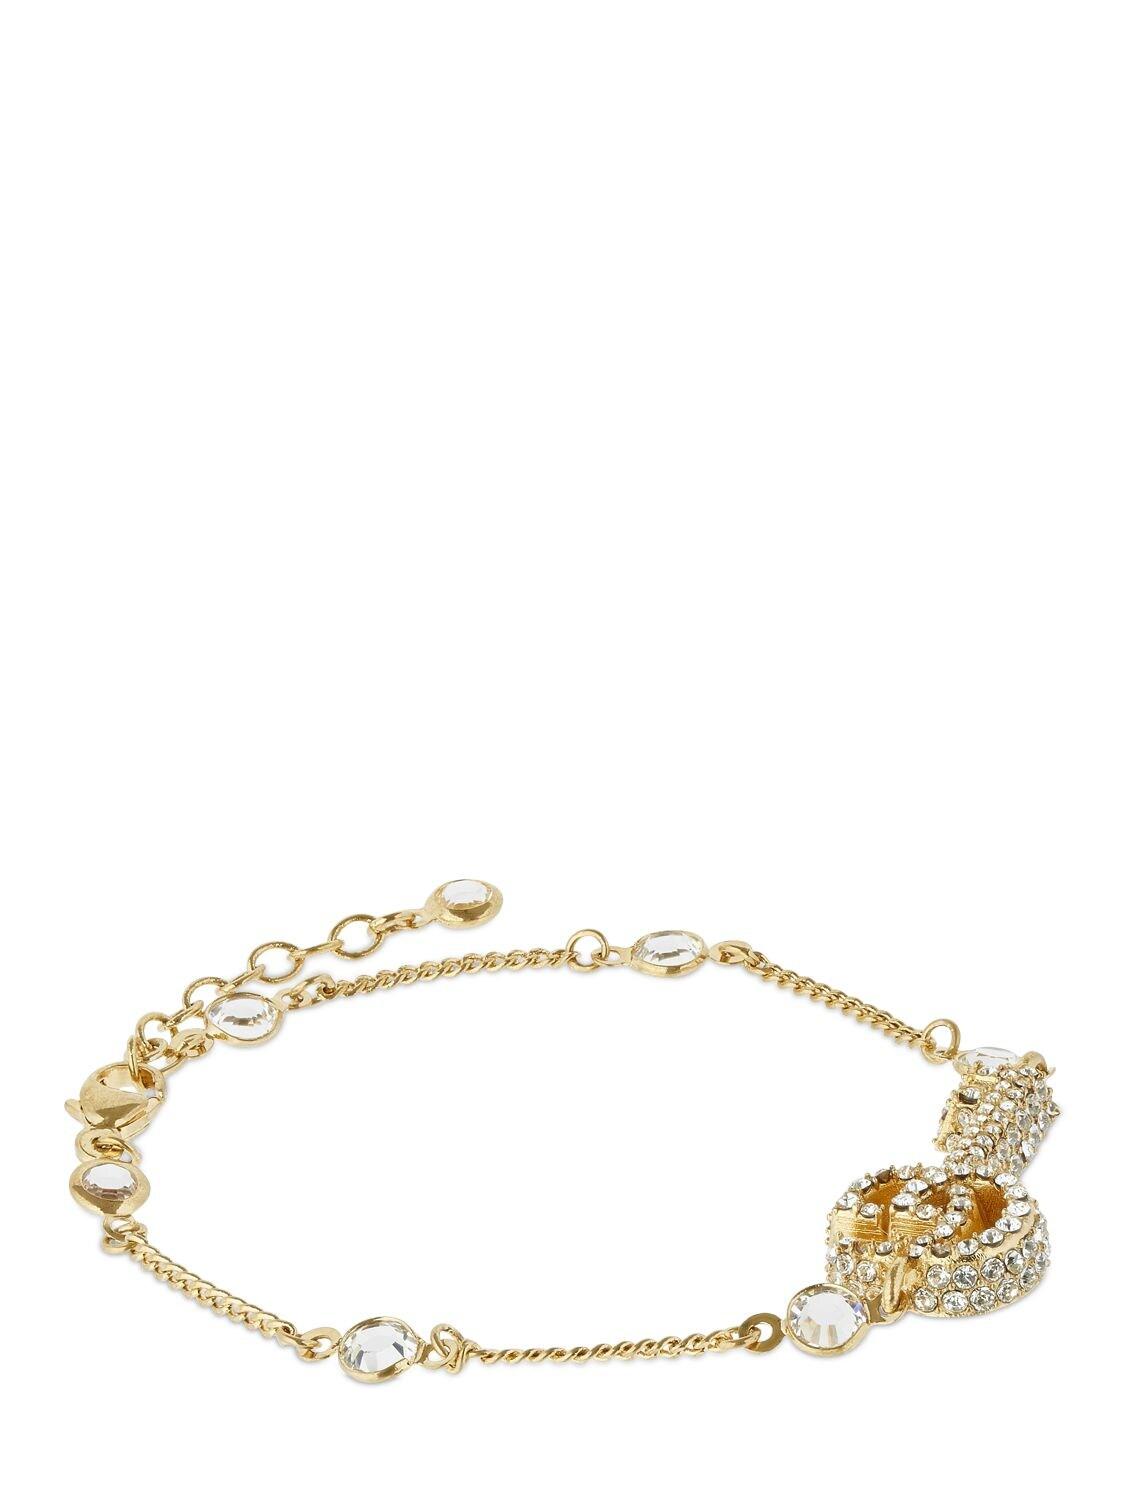 Gucci Double G Key Bracelet W/ Crystals | Lyst